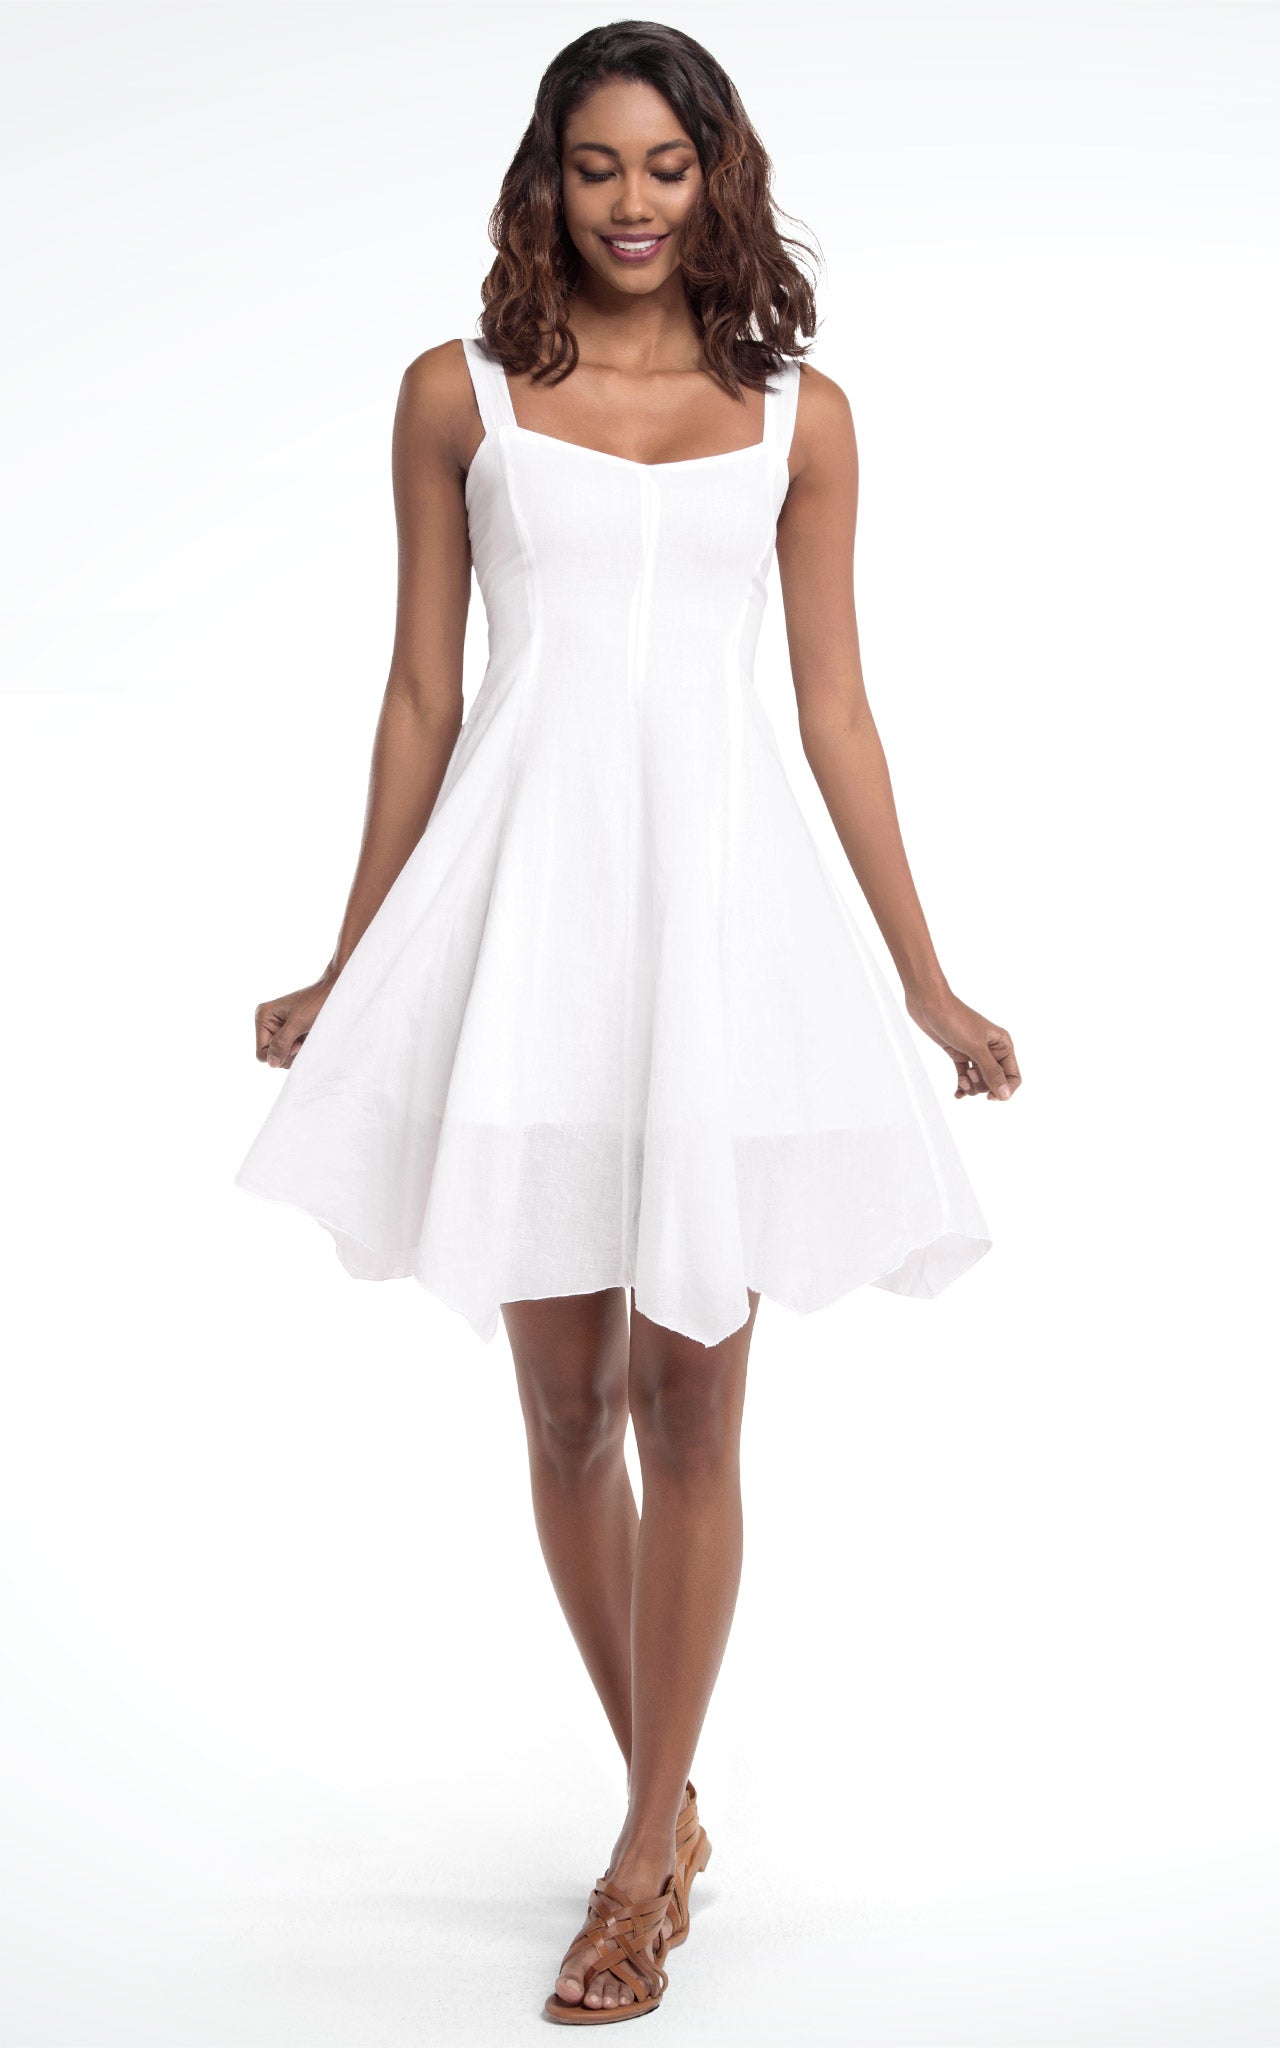 womens white cotton dress